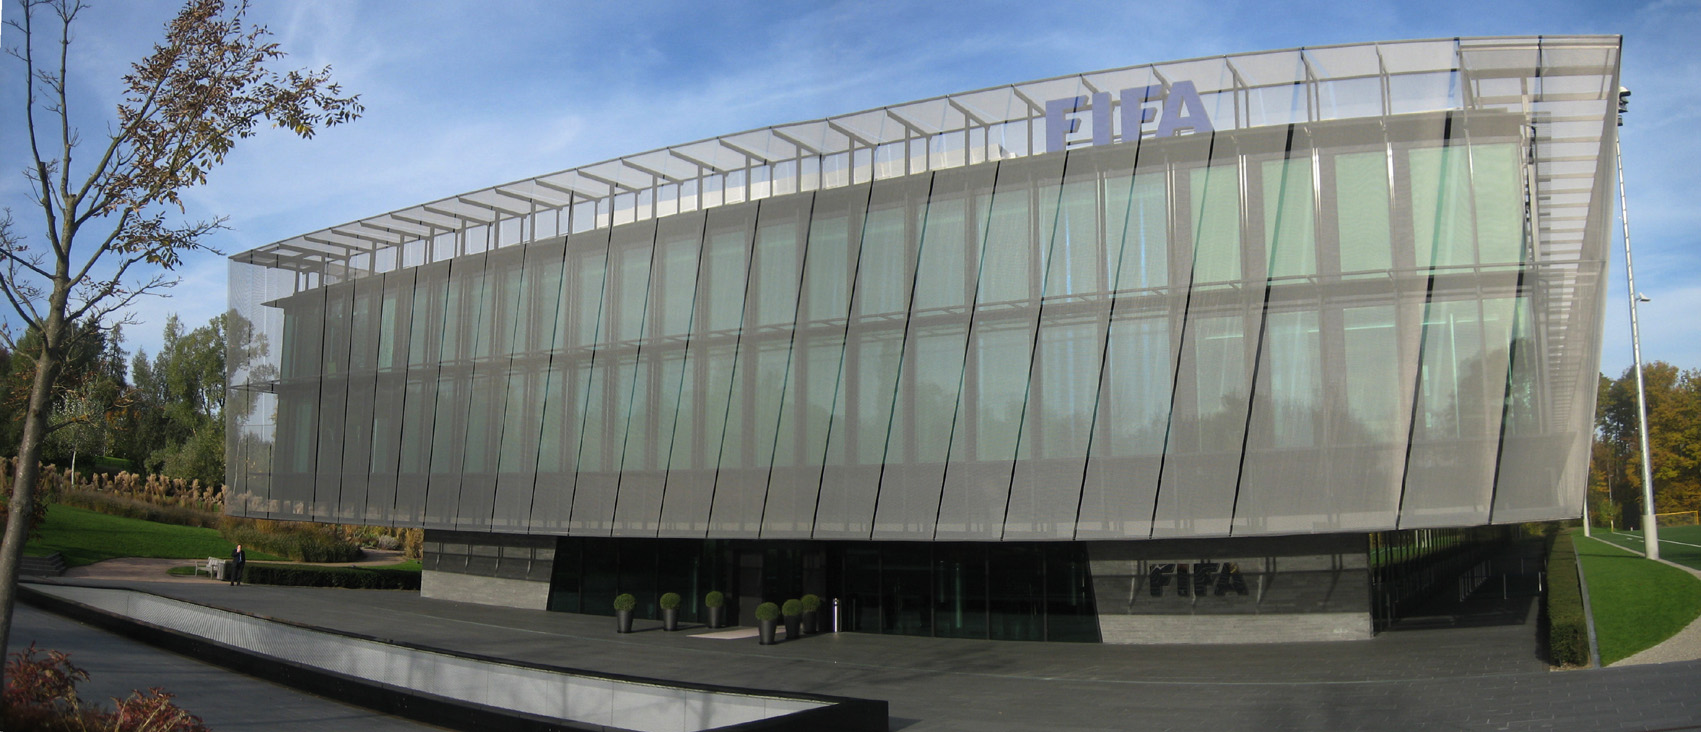 Sede de la FIFA - Wikipedia, la enciclopedia libre